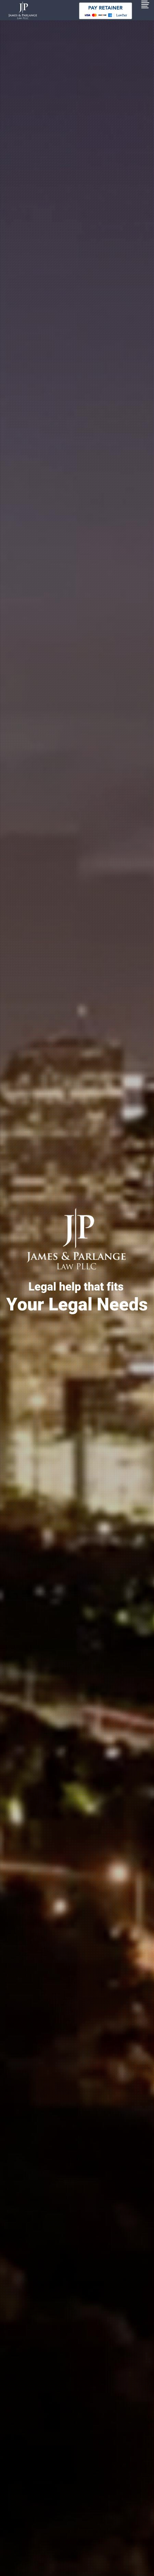 James & Parlange Law, PLLC - Kingwood TX Lawyers